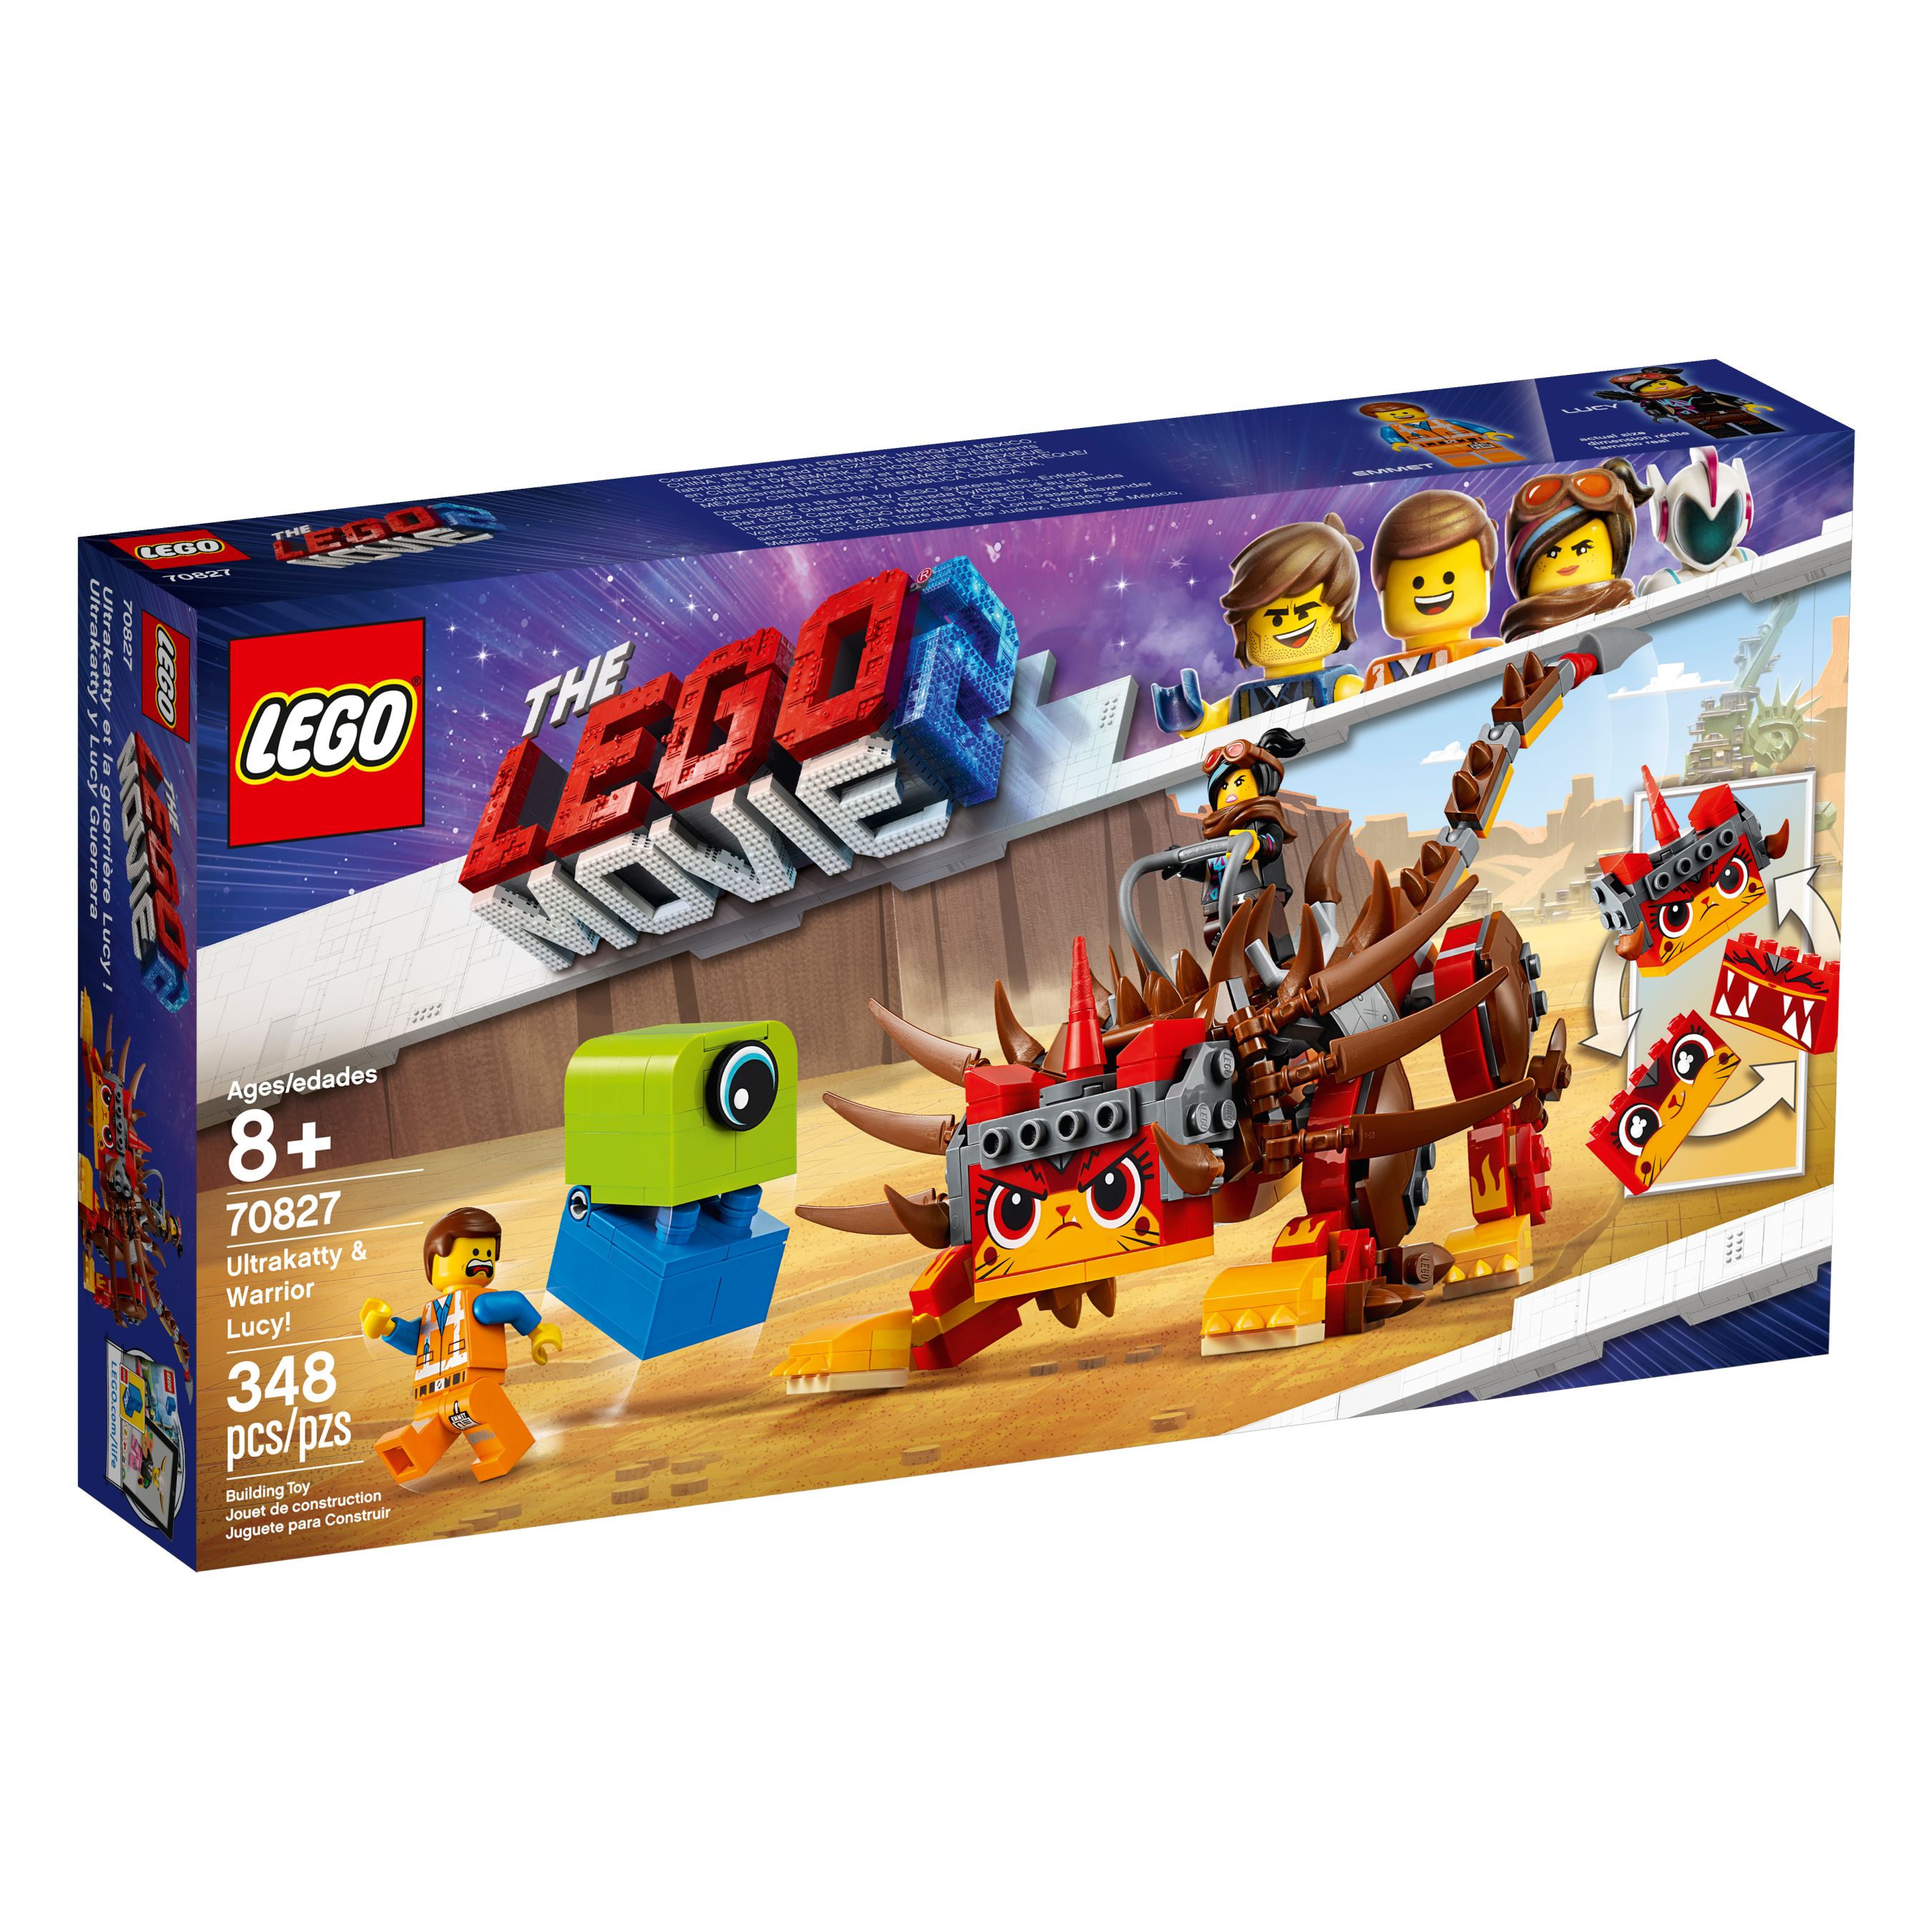 LEGO The LEGO Movie 2 70827 Ultrakatty & Krieger-Lucy! LEGO_70827_alt1.jpg